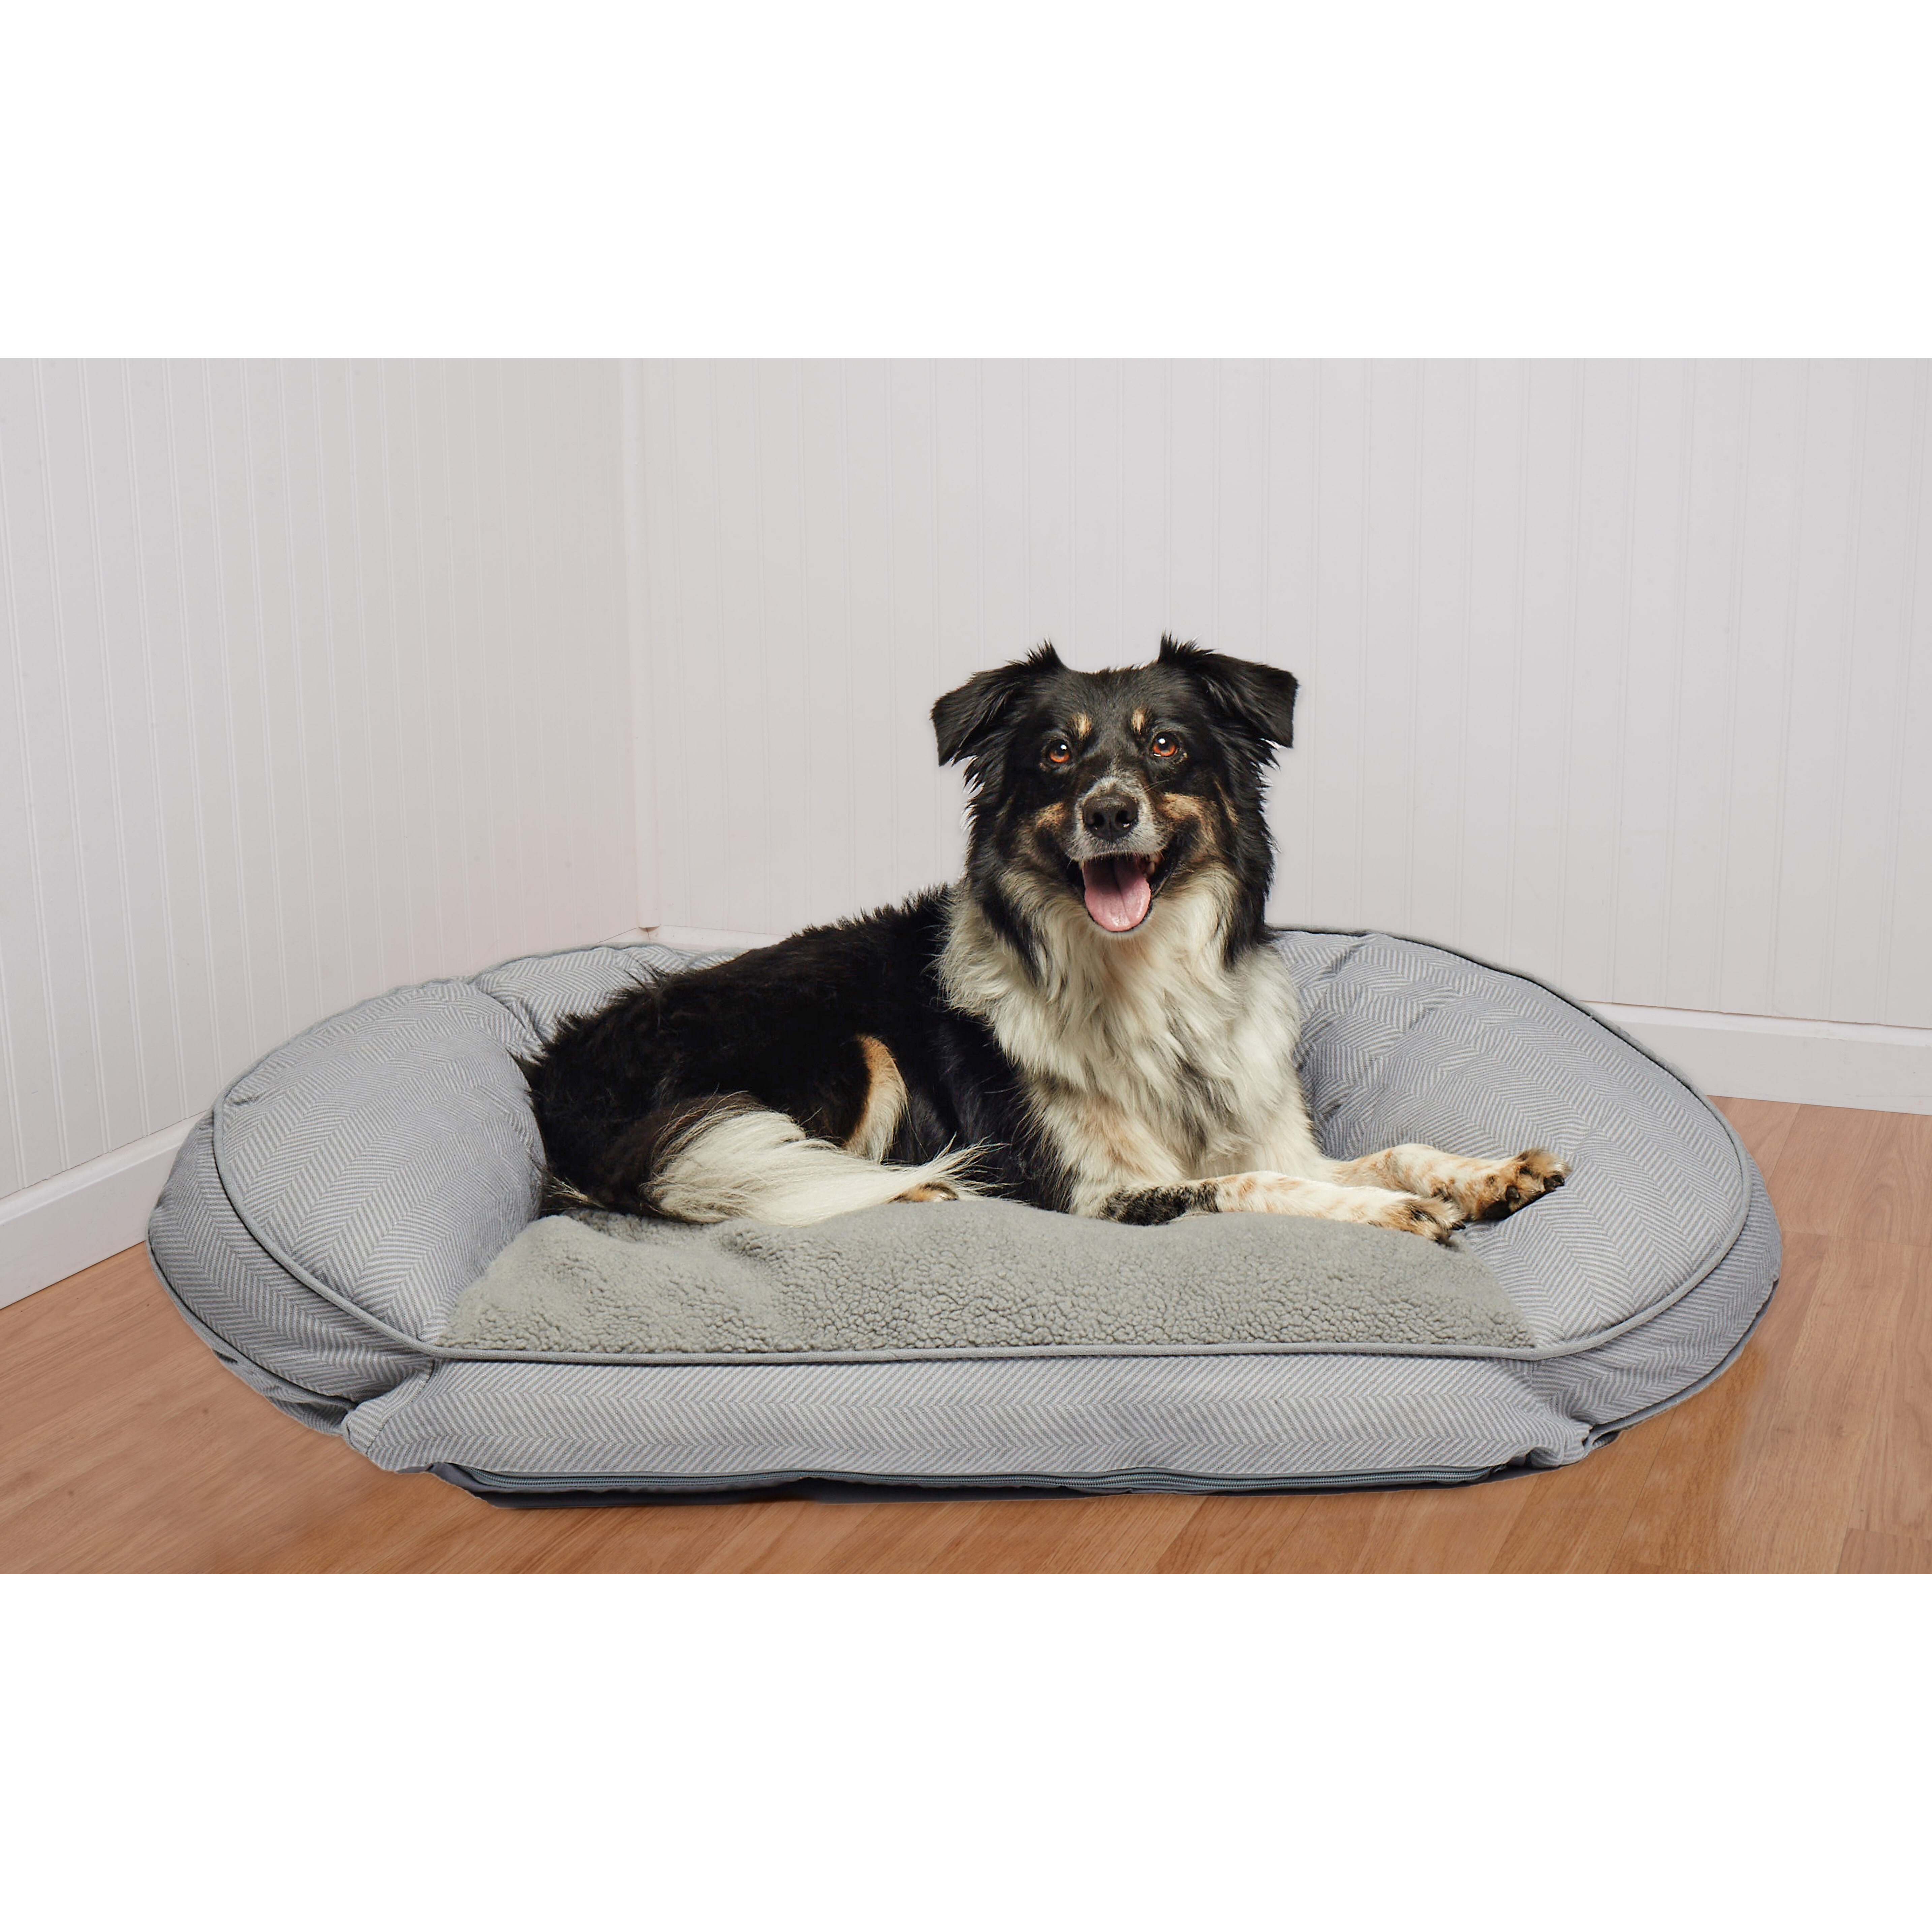 orthopedic memory foam dog bed